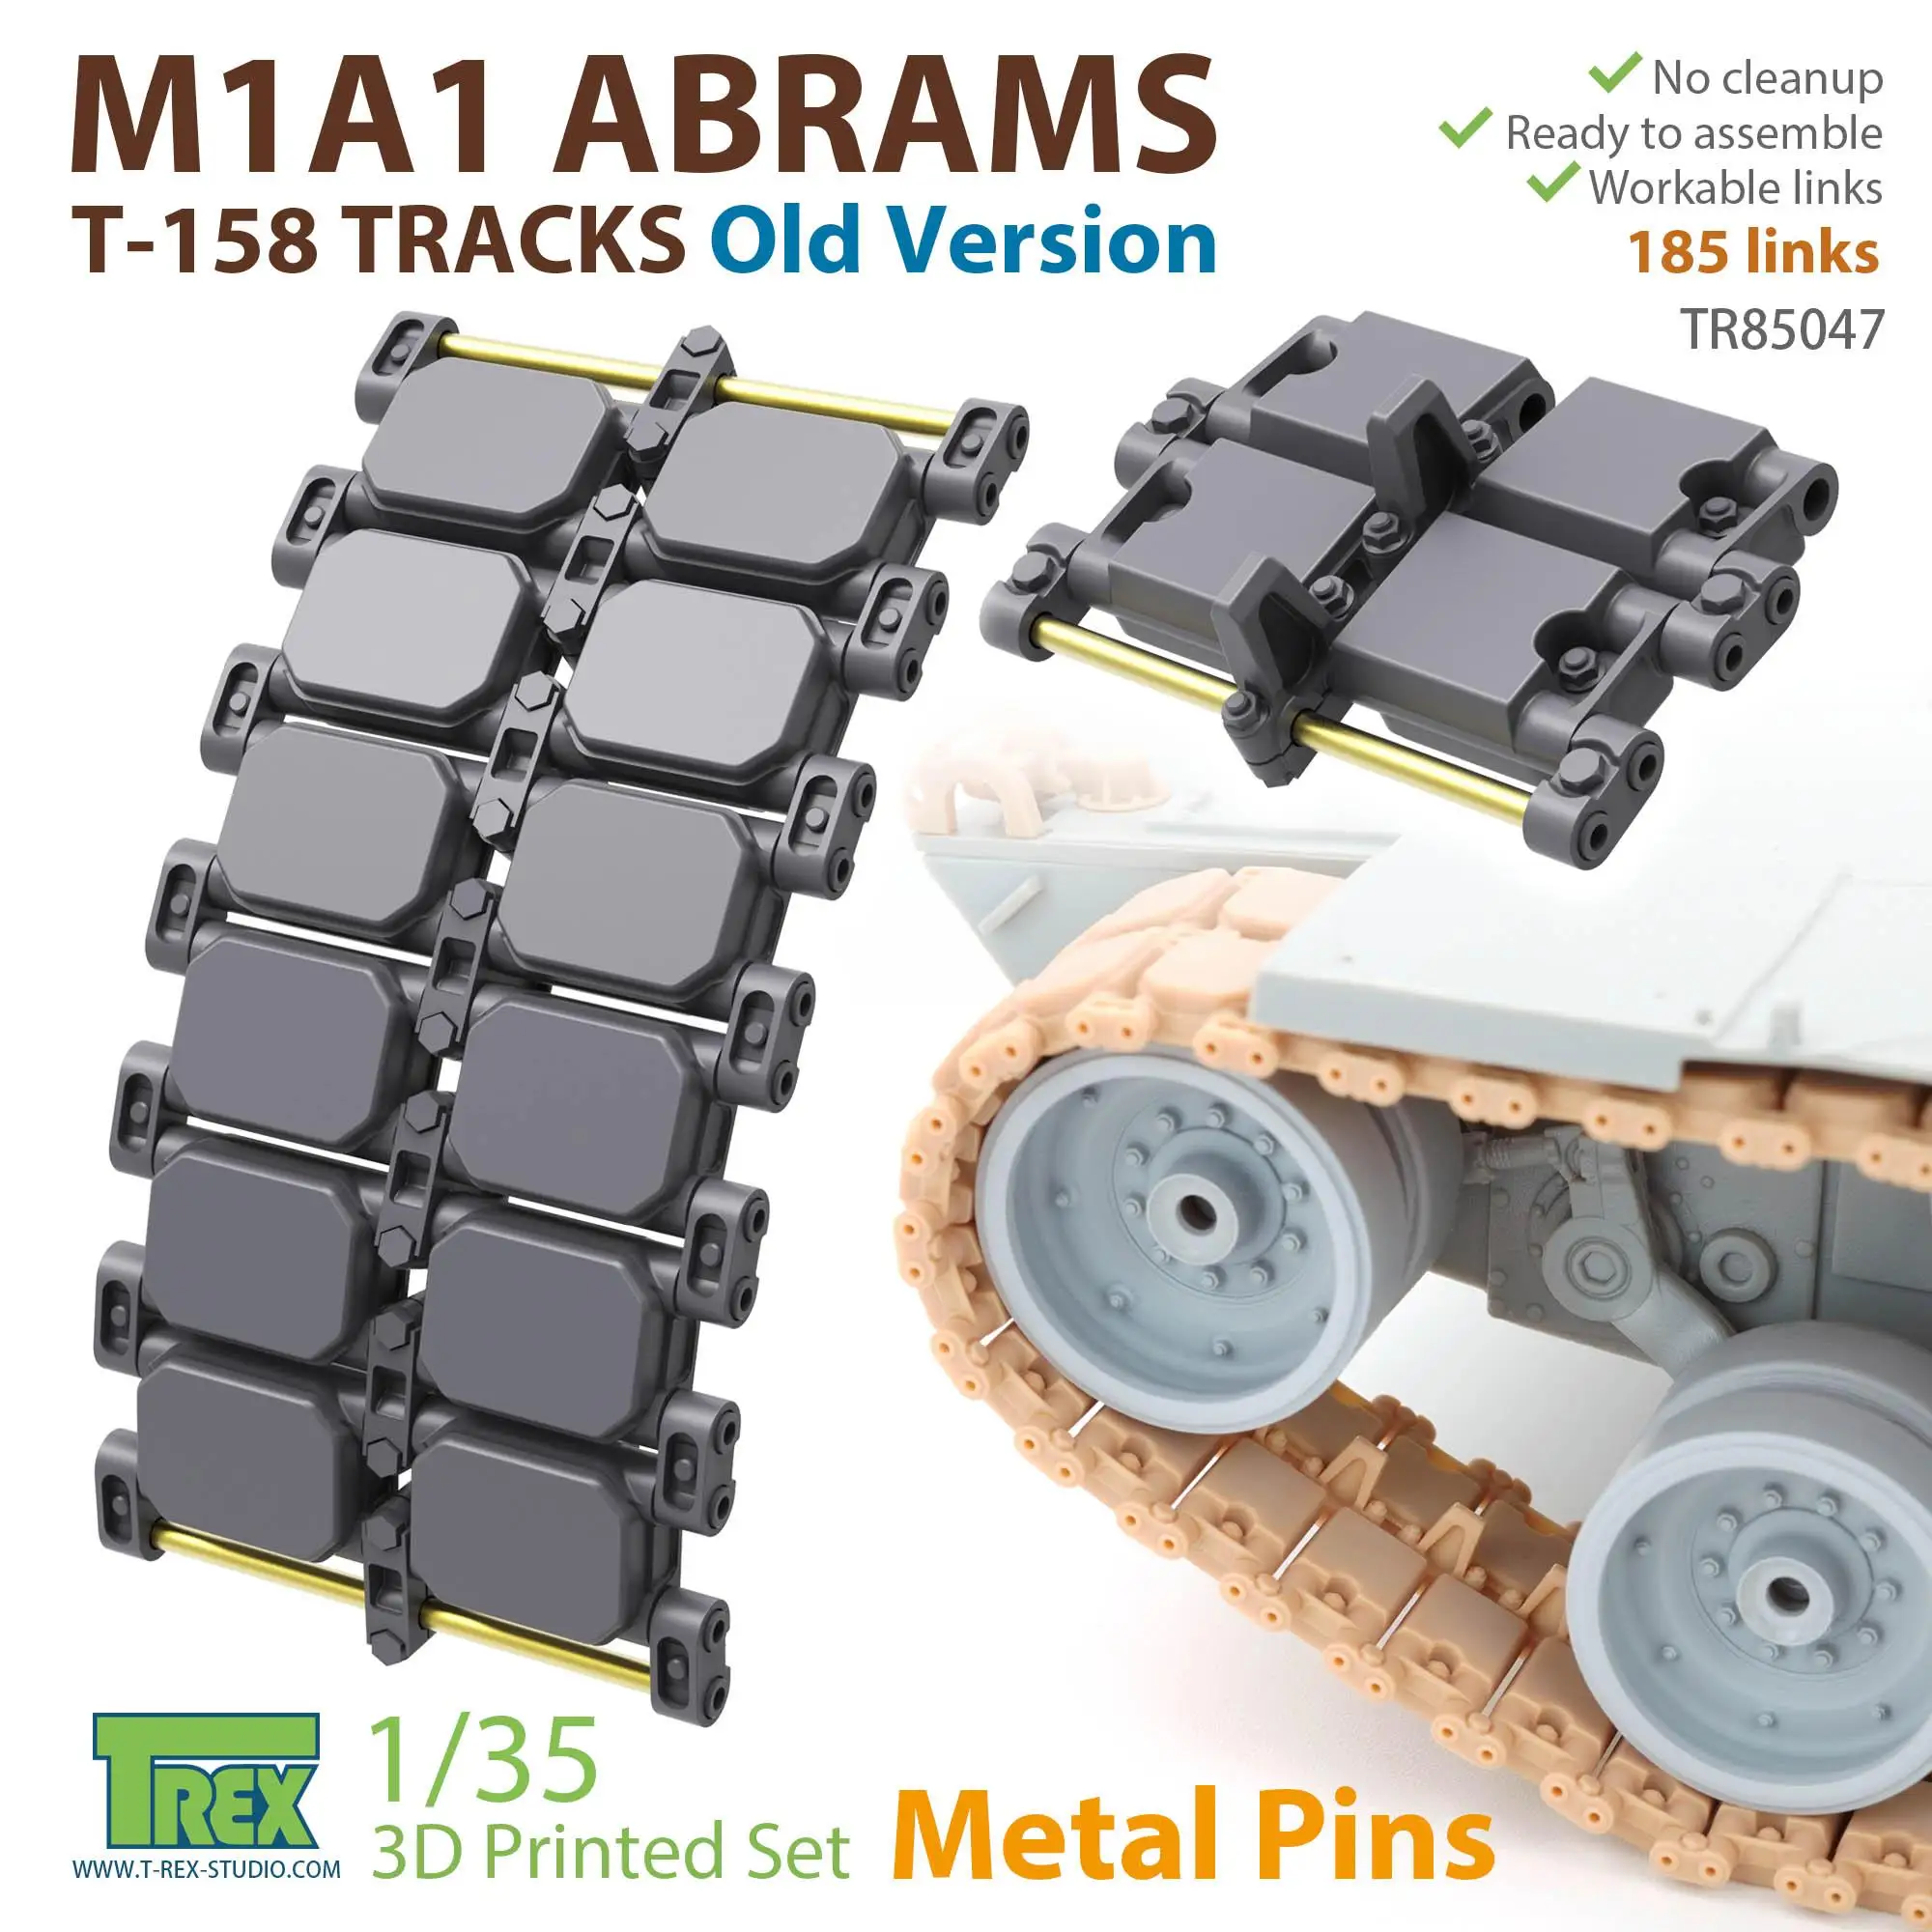 

T-REX 85047 1/35 M1A1 Abrams T-158 Tracks Old Version (Accessory Parts)